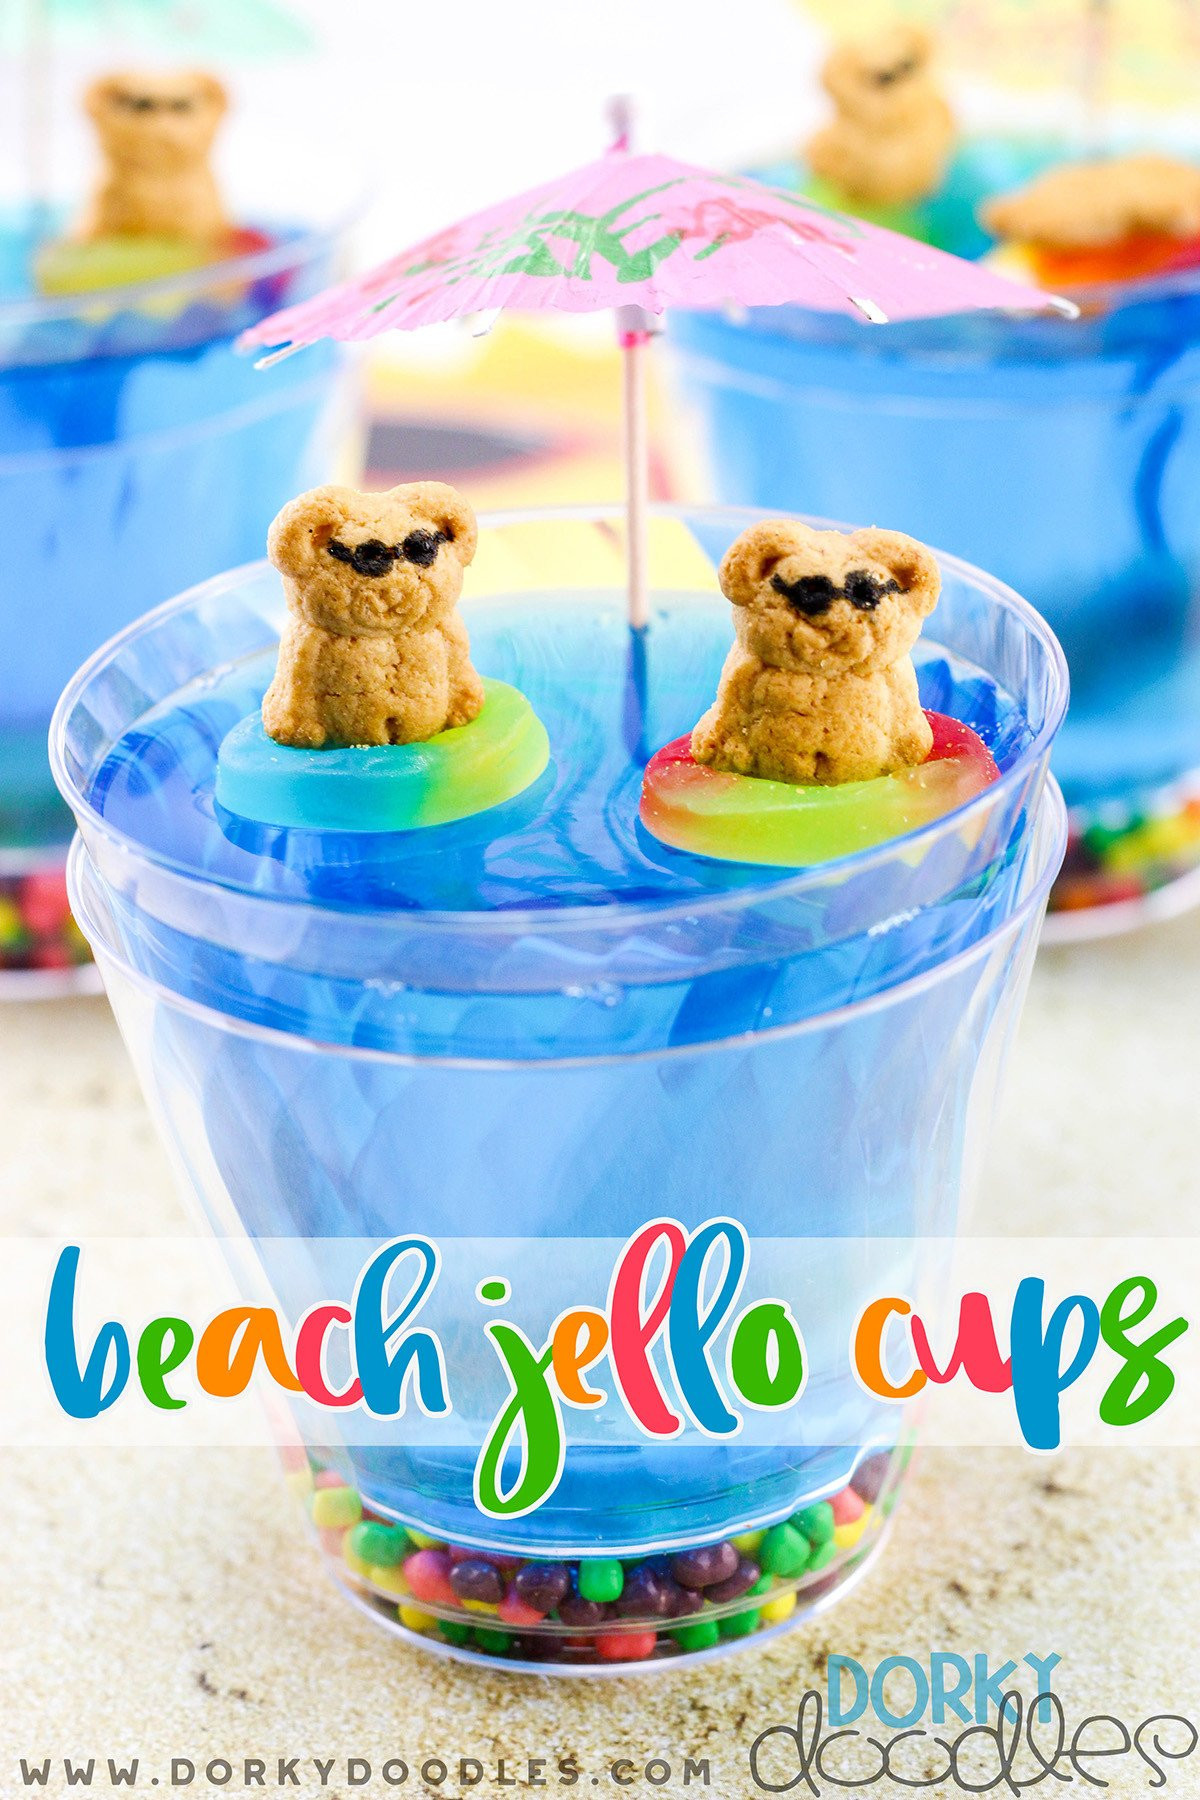 Beach Party Food Ideas Birthday
 Beach Party Jello Cup Snacks – Dorky Doodles